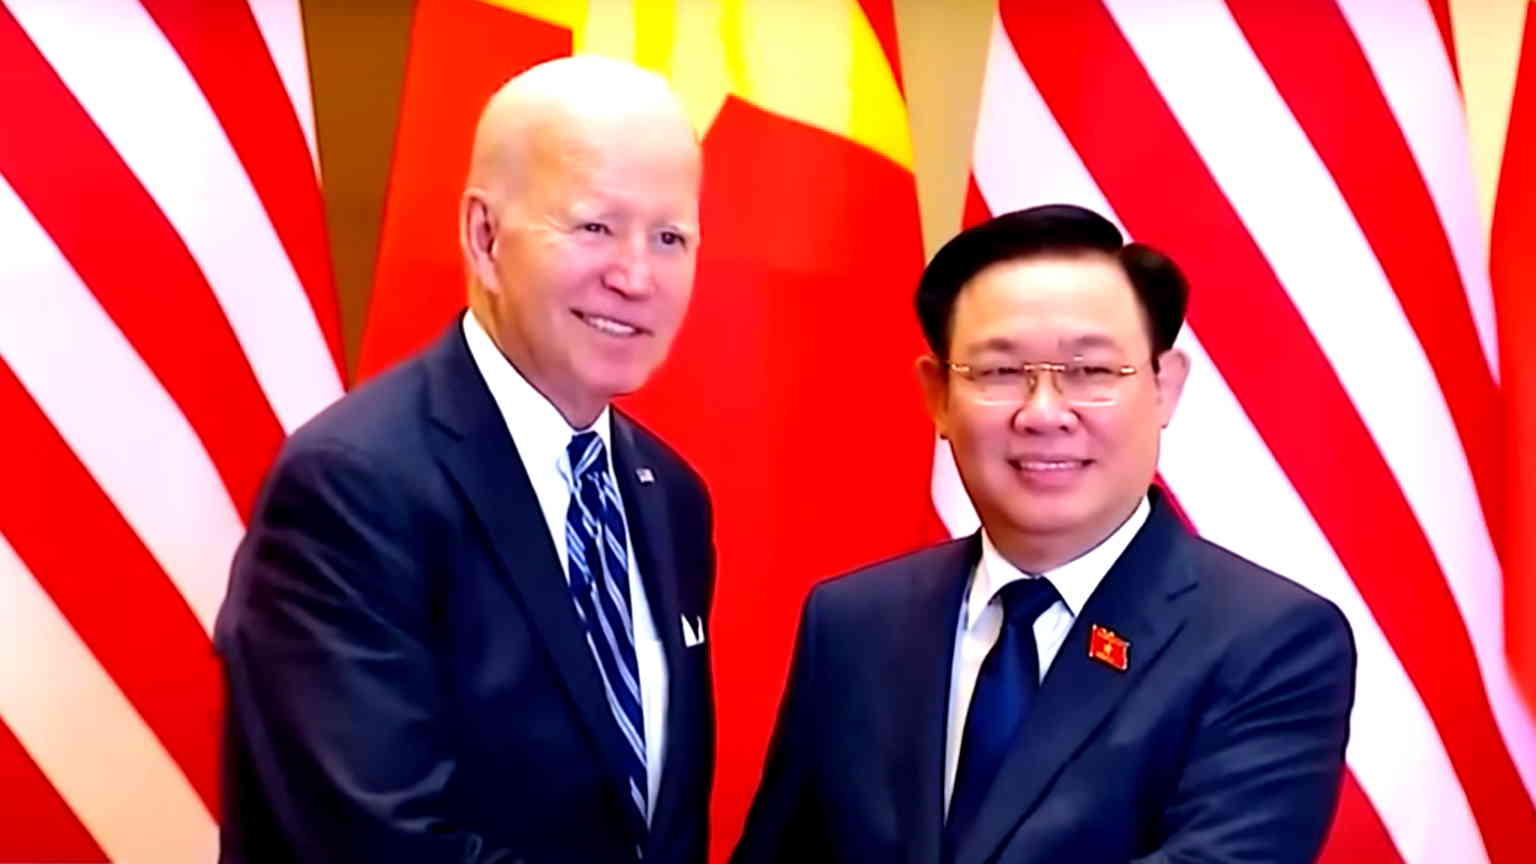 Biden strengthens US-Vietnam relationship during ‘historic’ first visit